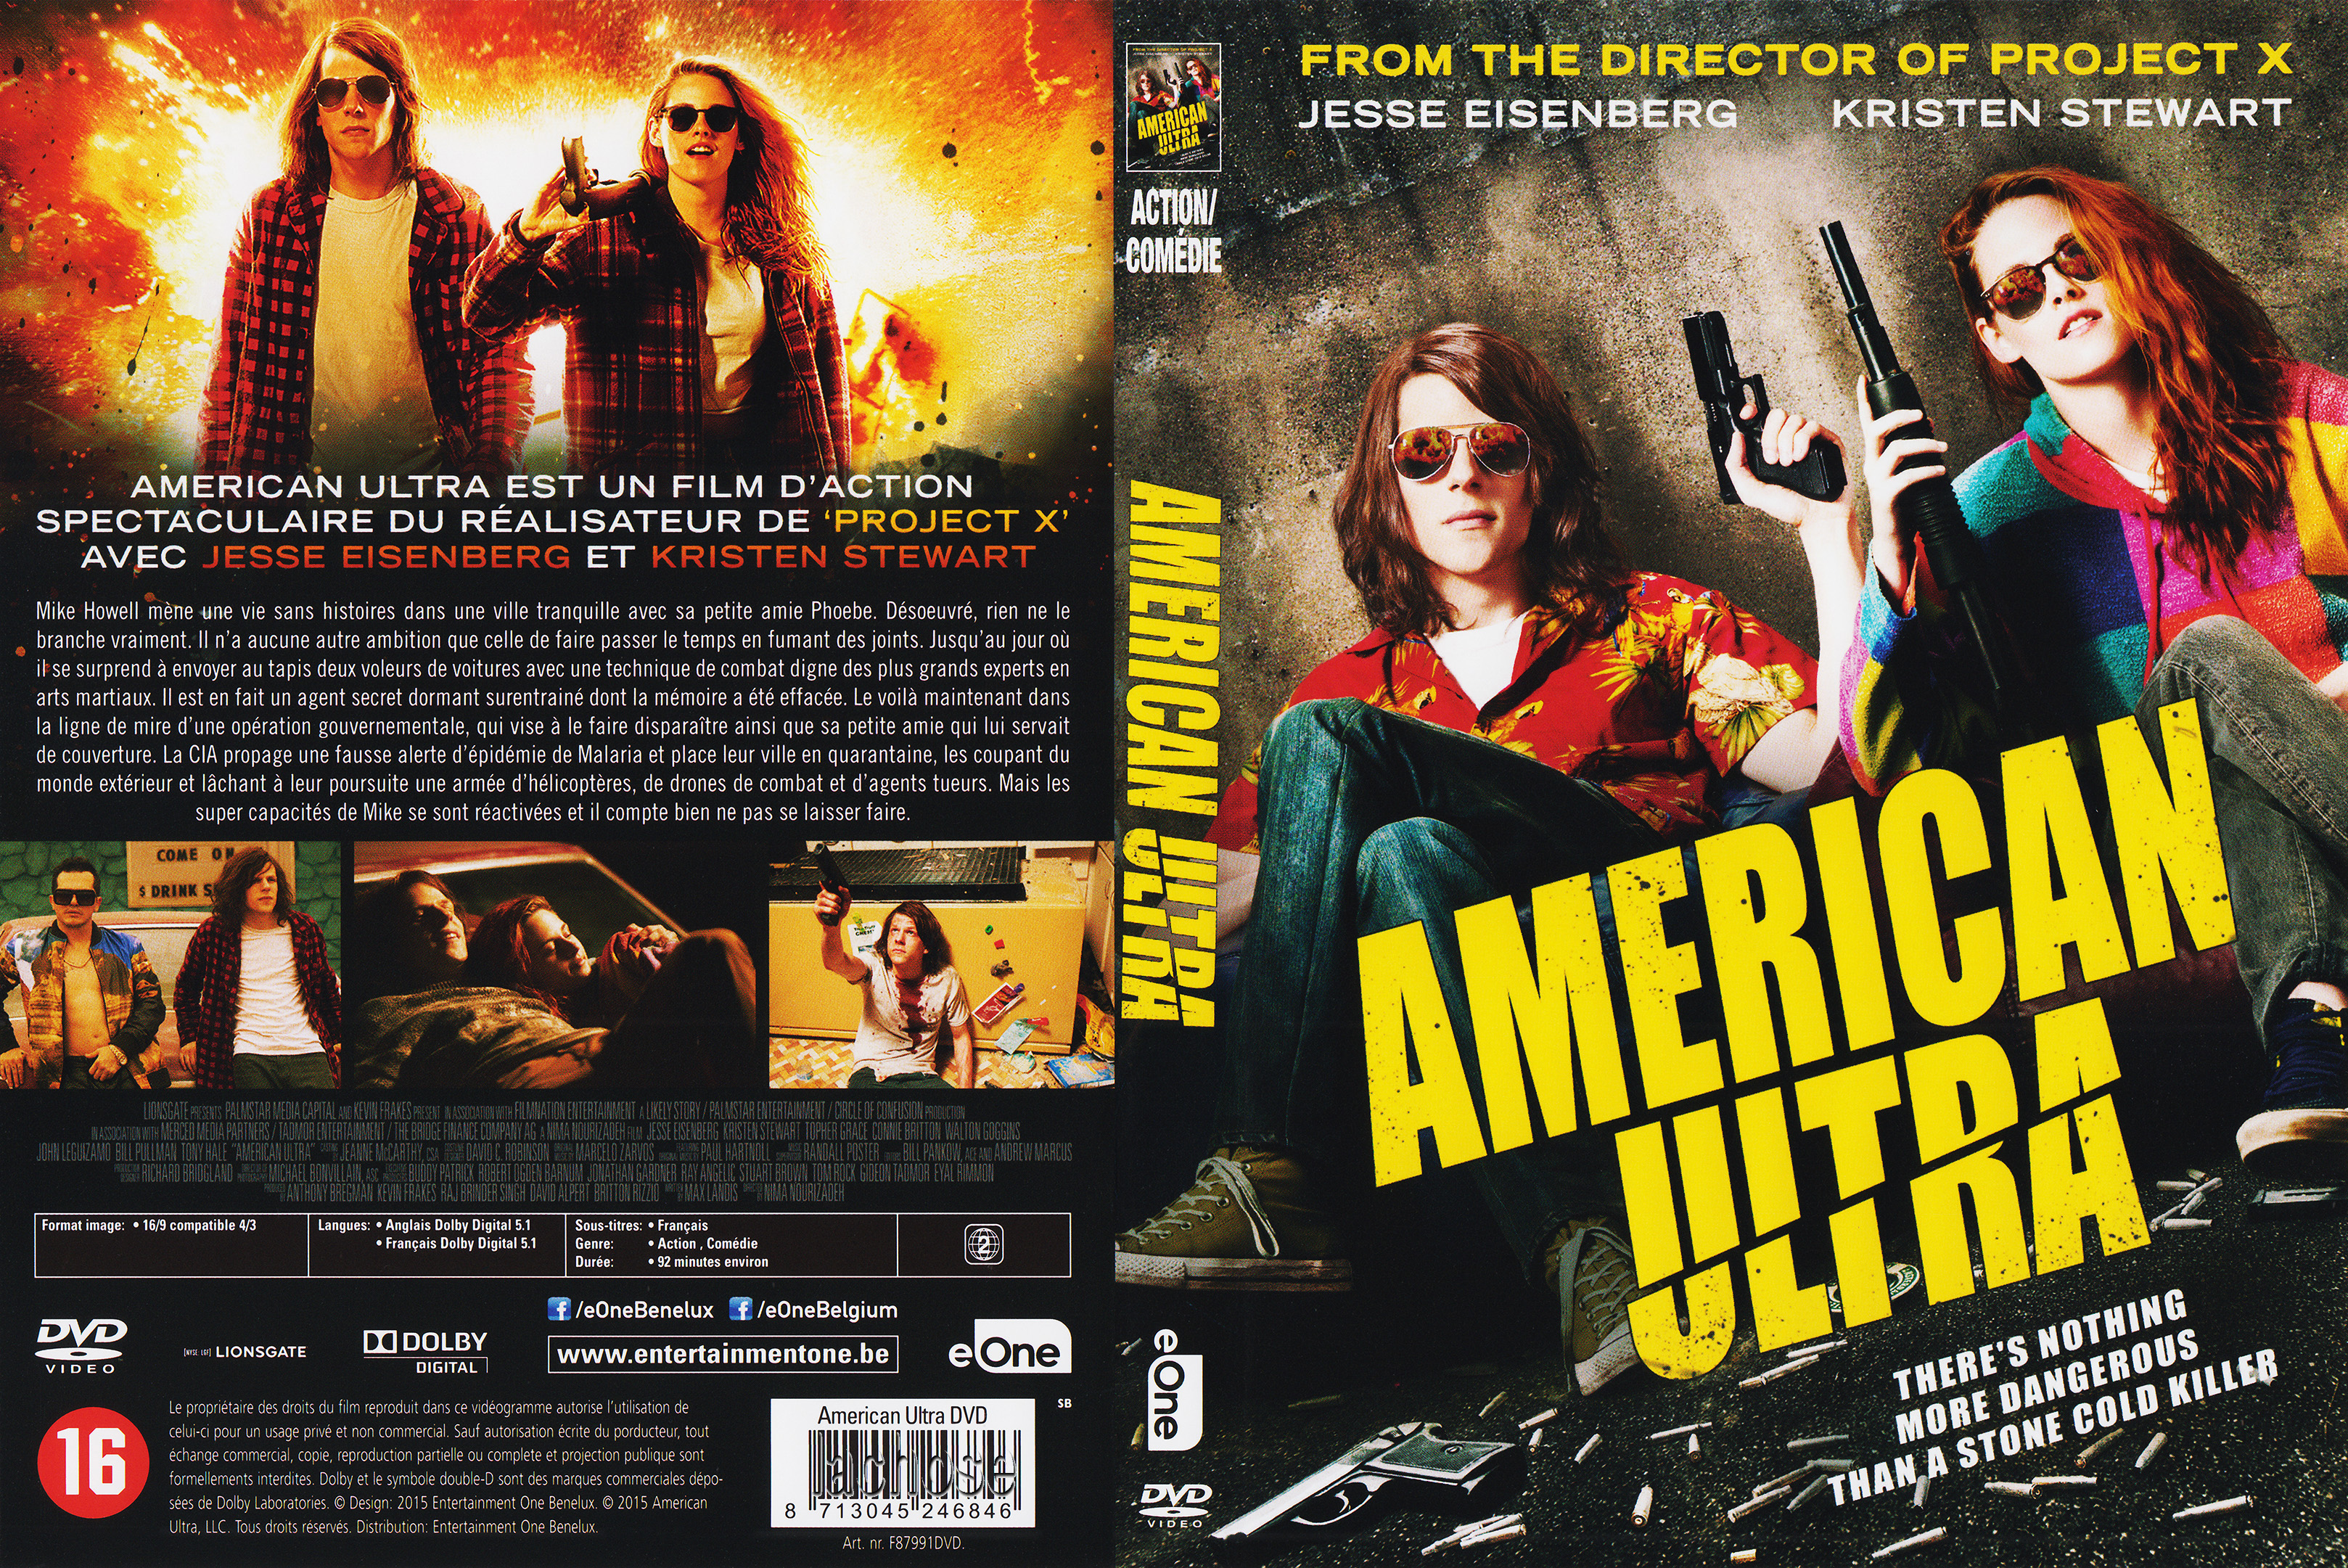 Jaquette DVD American Ultra v2